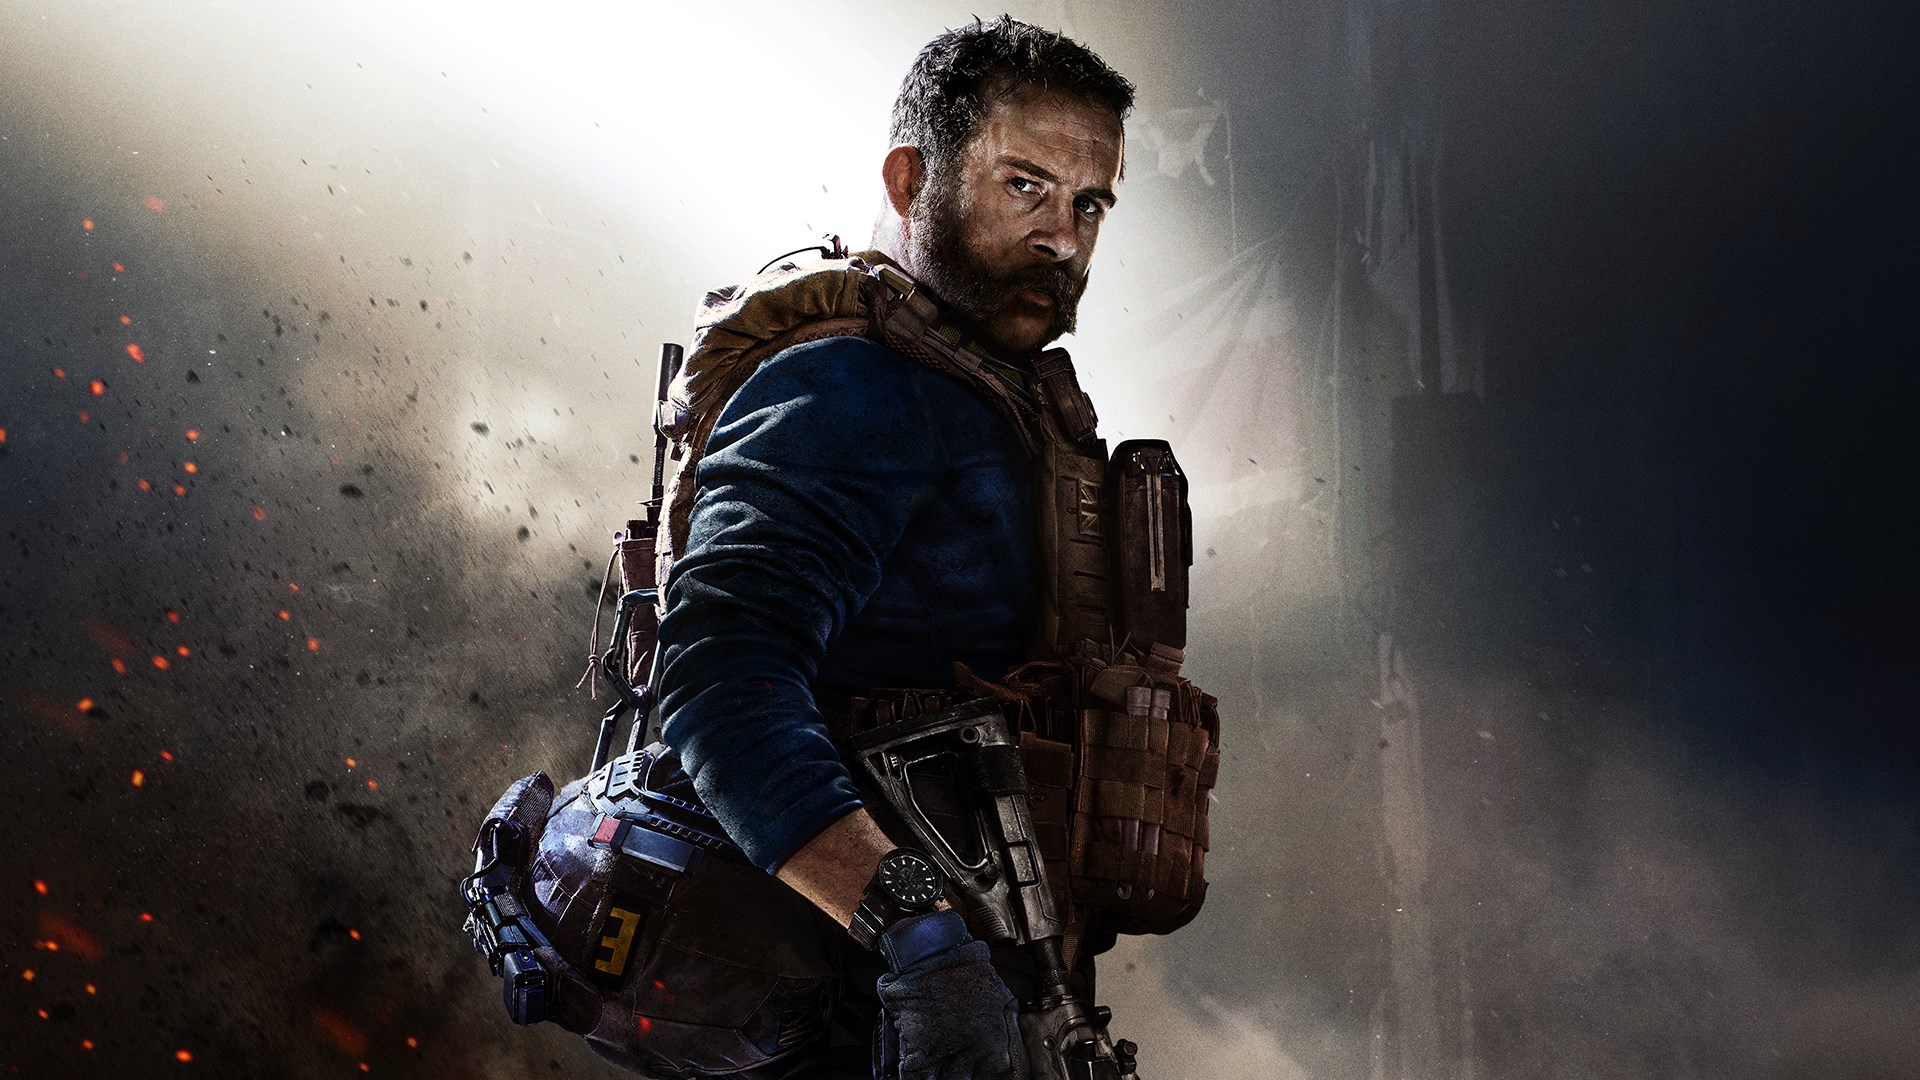 Call of Duty Modern Warfare Game Poster Wallpaper, HD Games 4K